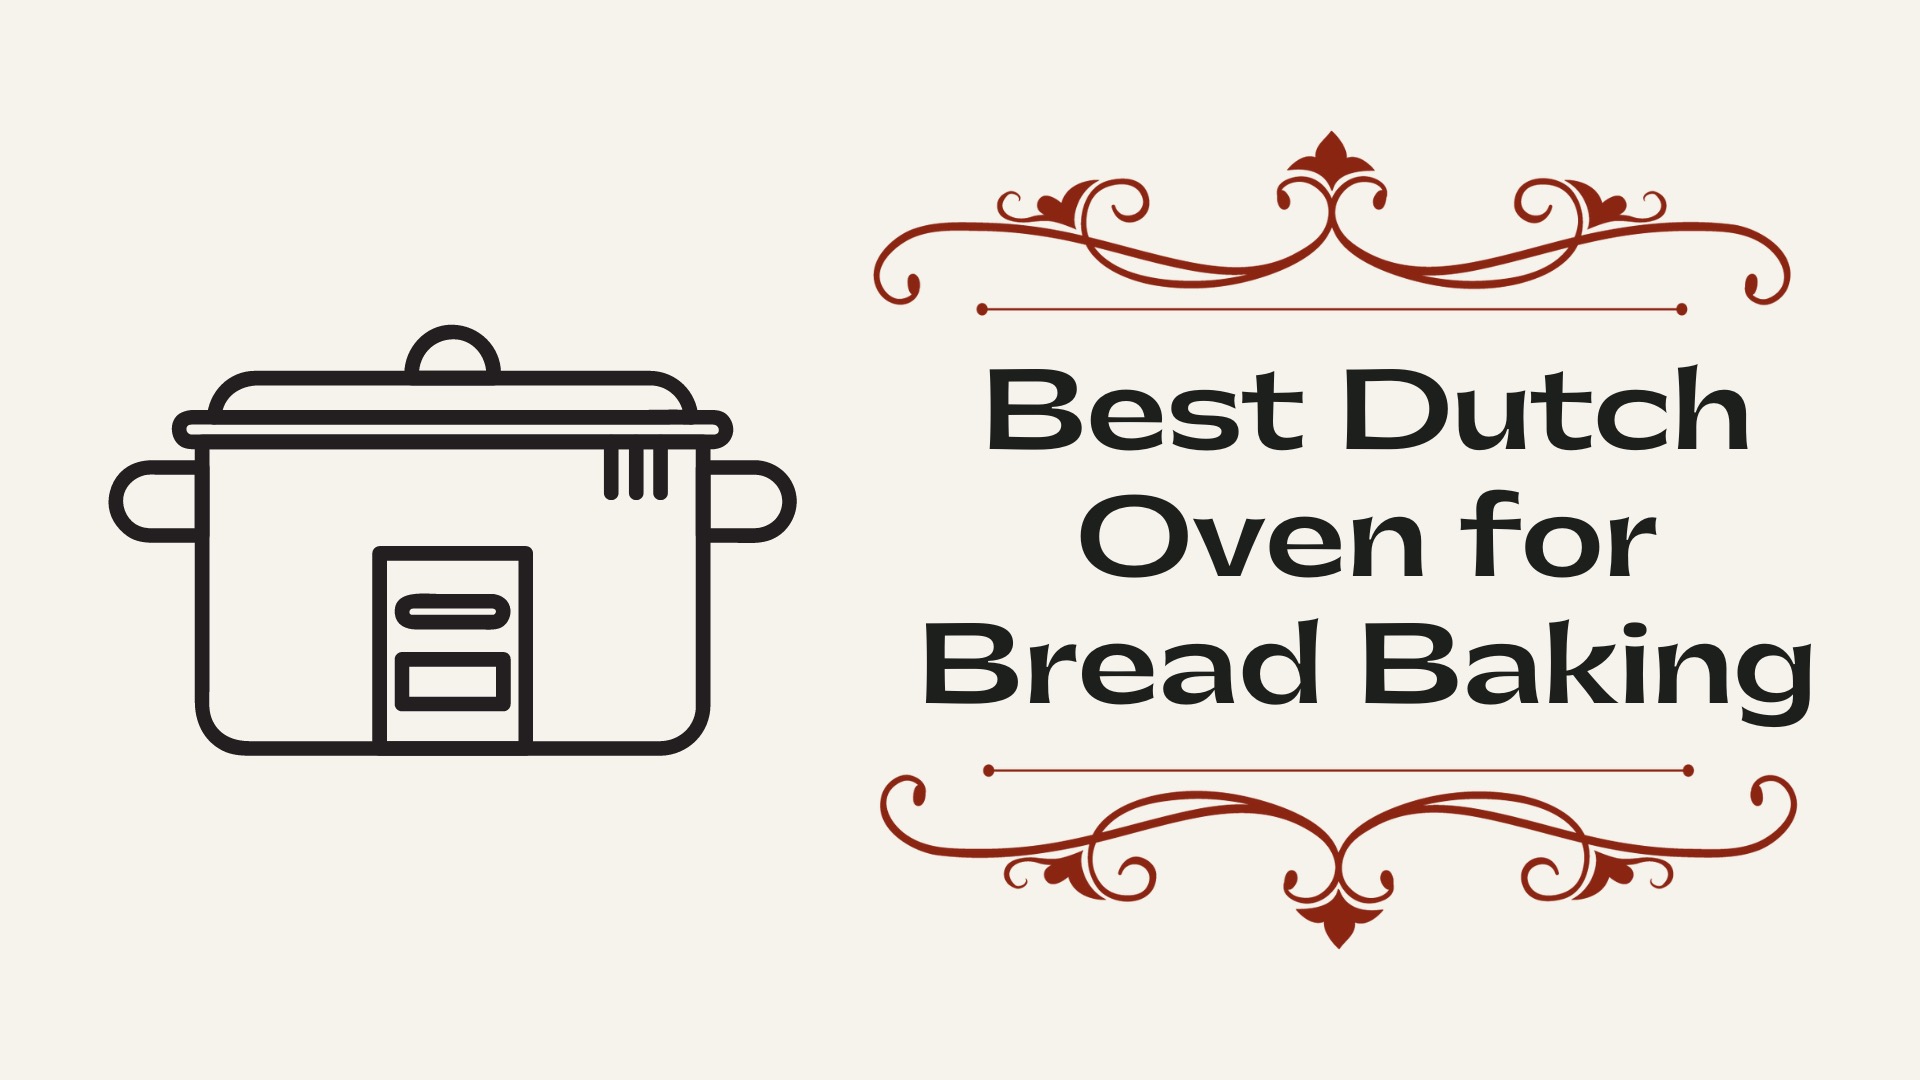 Best Dutch Oven for Bread Baking